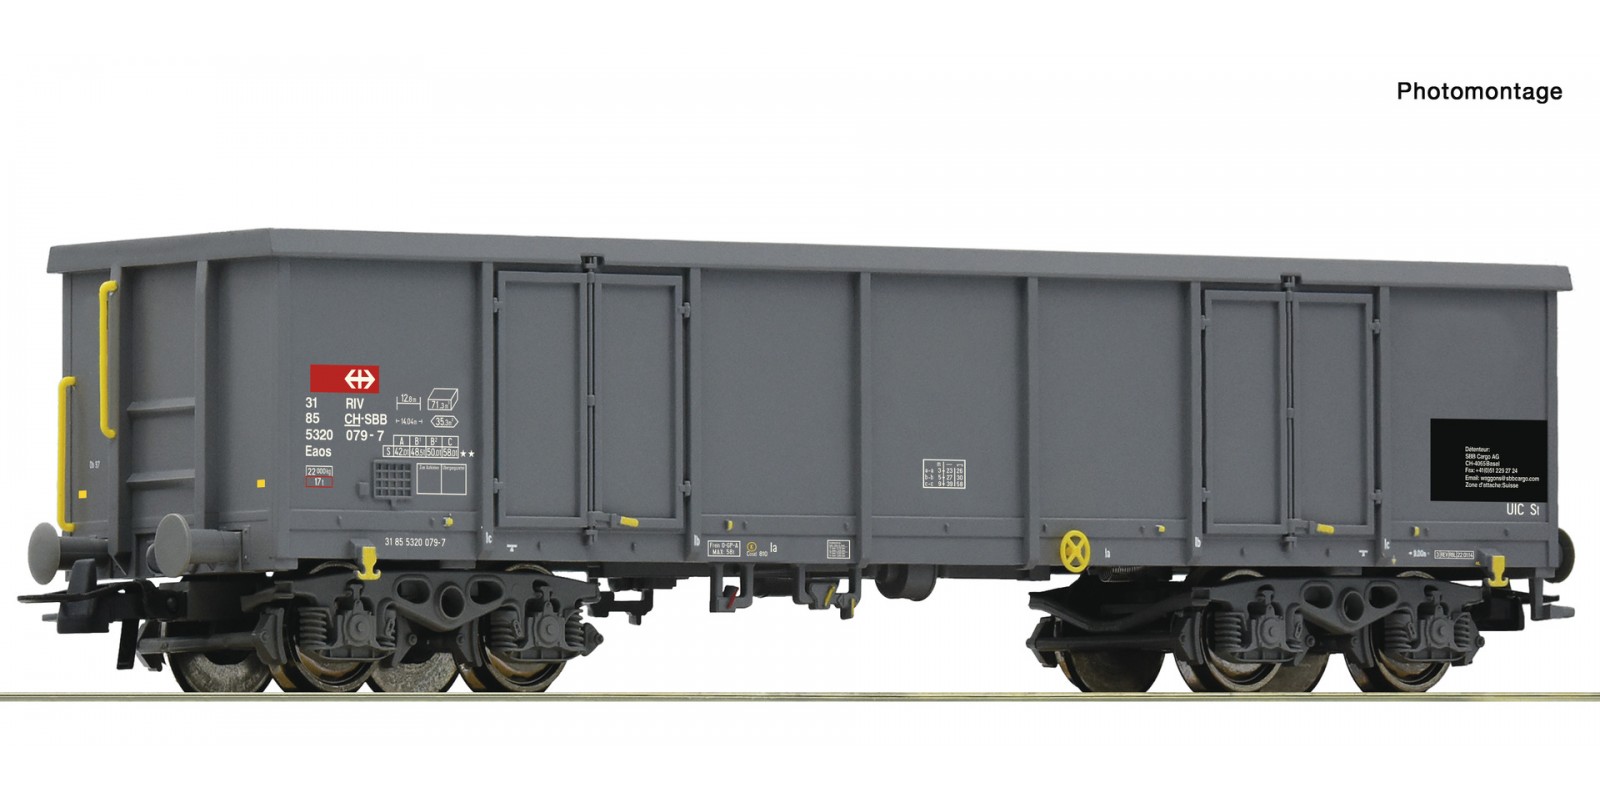 RO76325 Open goods wagon, SBB